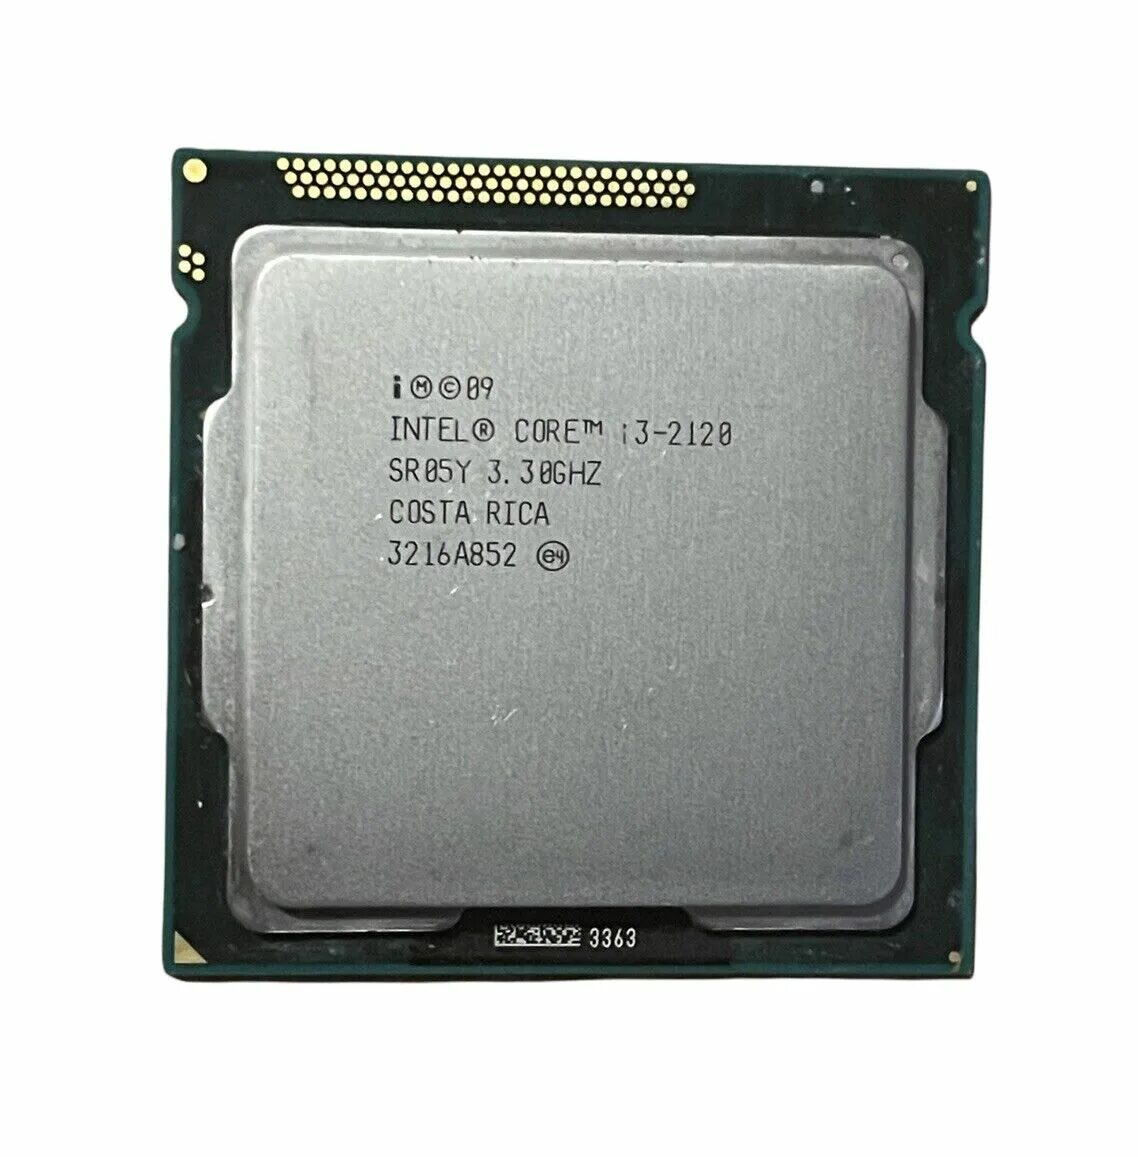 Intel i3 2120. Intel Core i3 2120. Intel Core TM i3 2120 CPU 3.30GHZ. Intel(r) Core(TM) i3-2120 CPU @ 3.30GHZ 3.30 GHZ. 2120 сокет